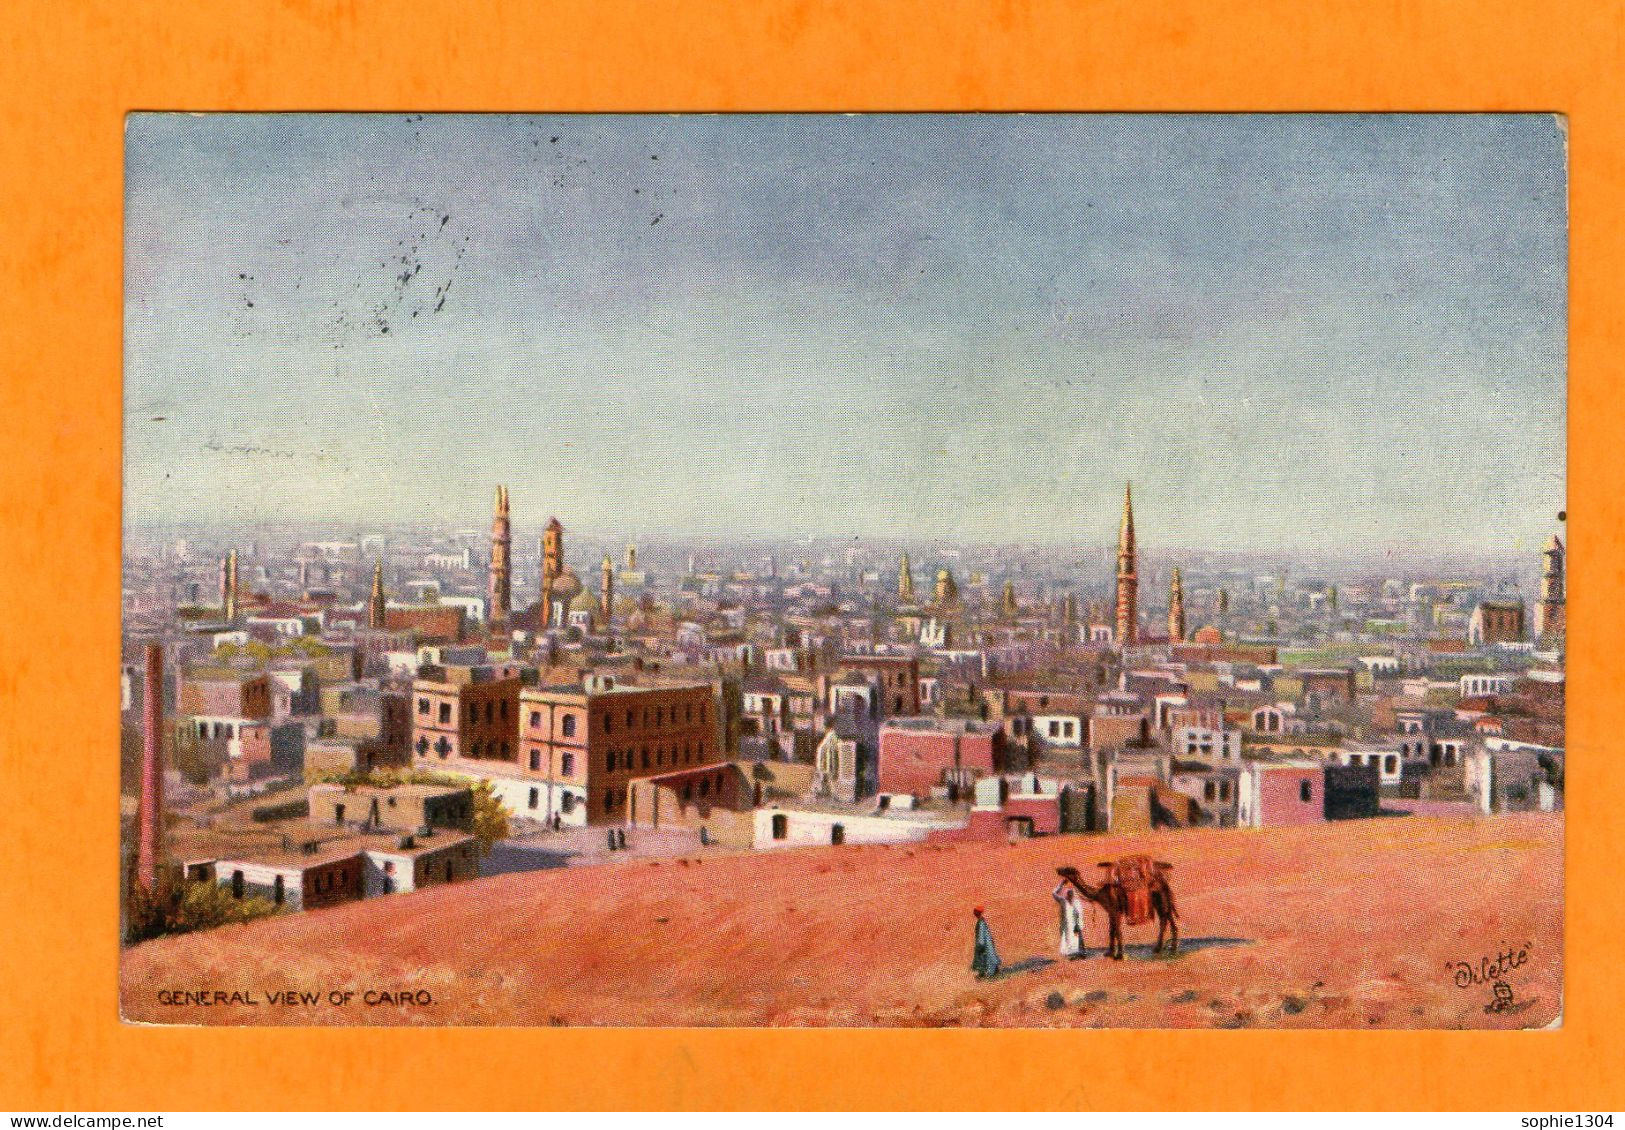 GENERAL VIEW OF CAIRO - (OILETTE) - El Cairo